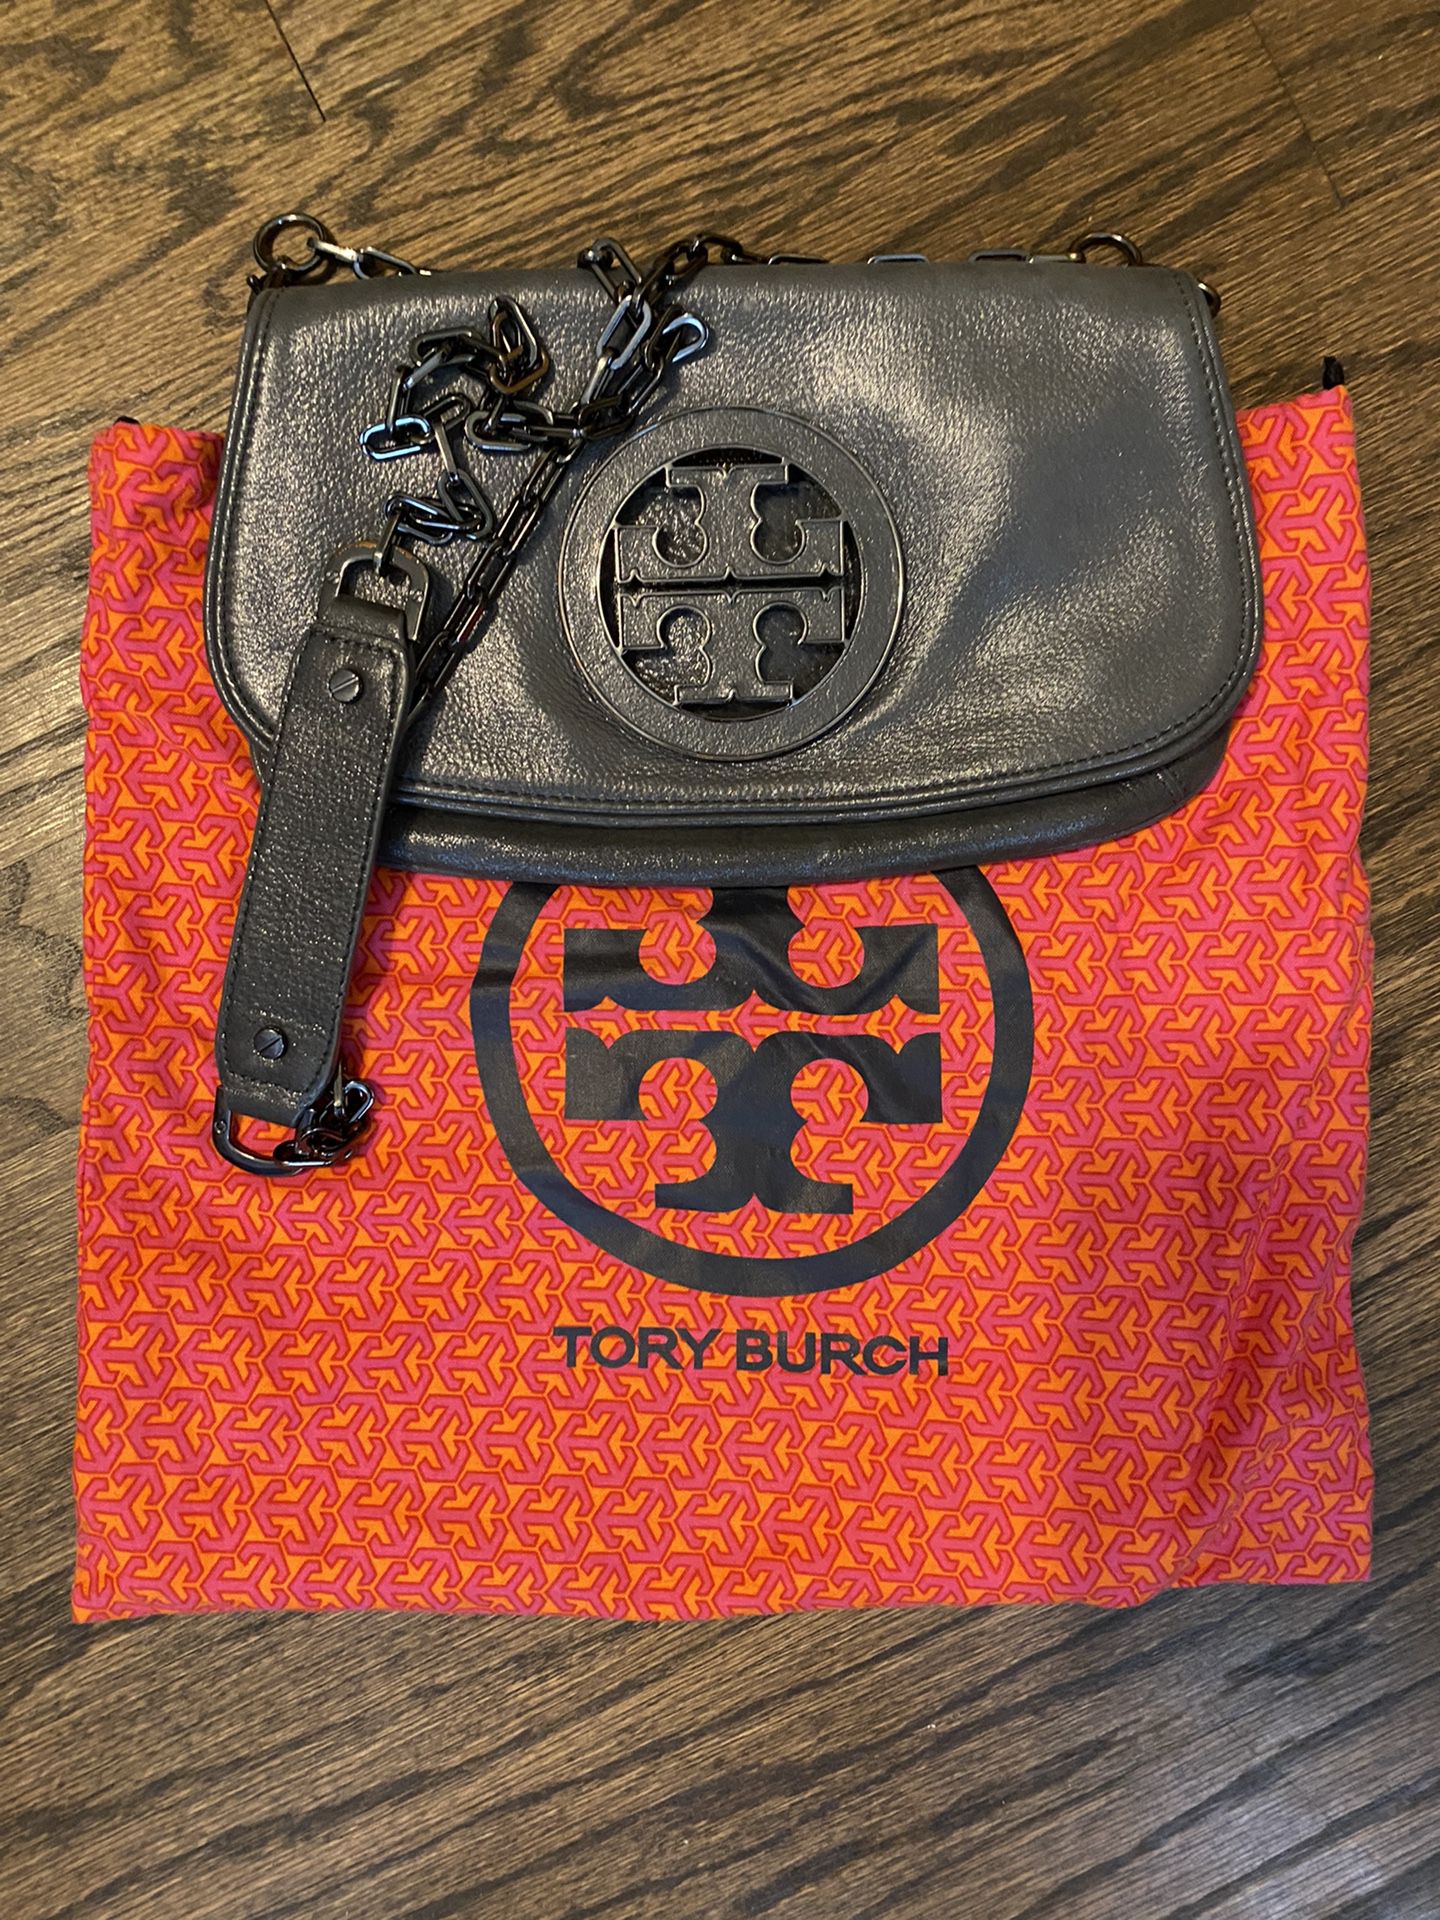 Tory Burch Crossbody for Sale in Orlando, FL - OfferUp